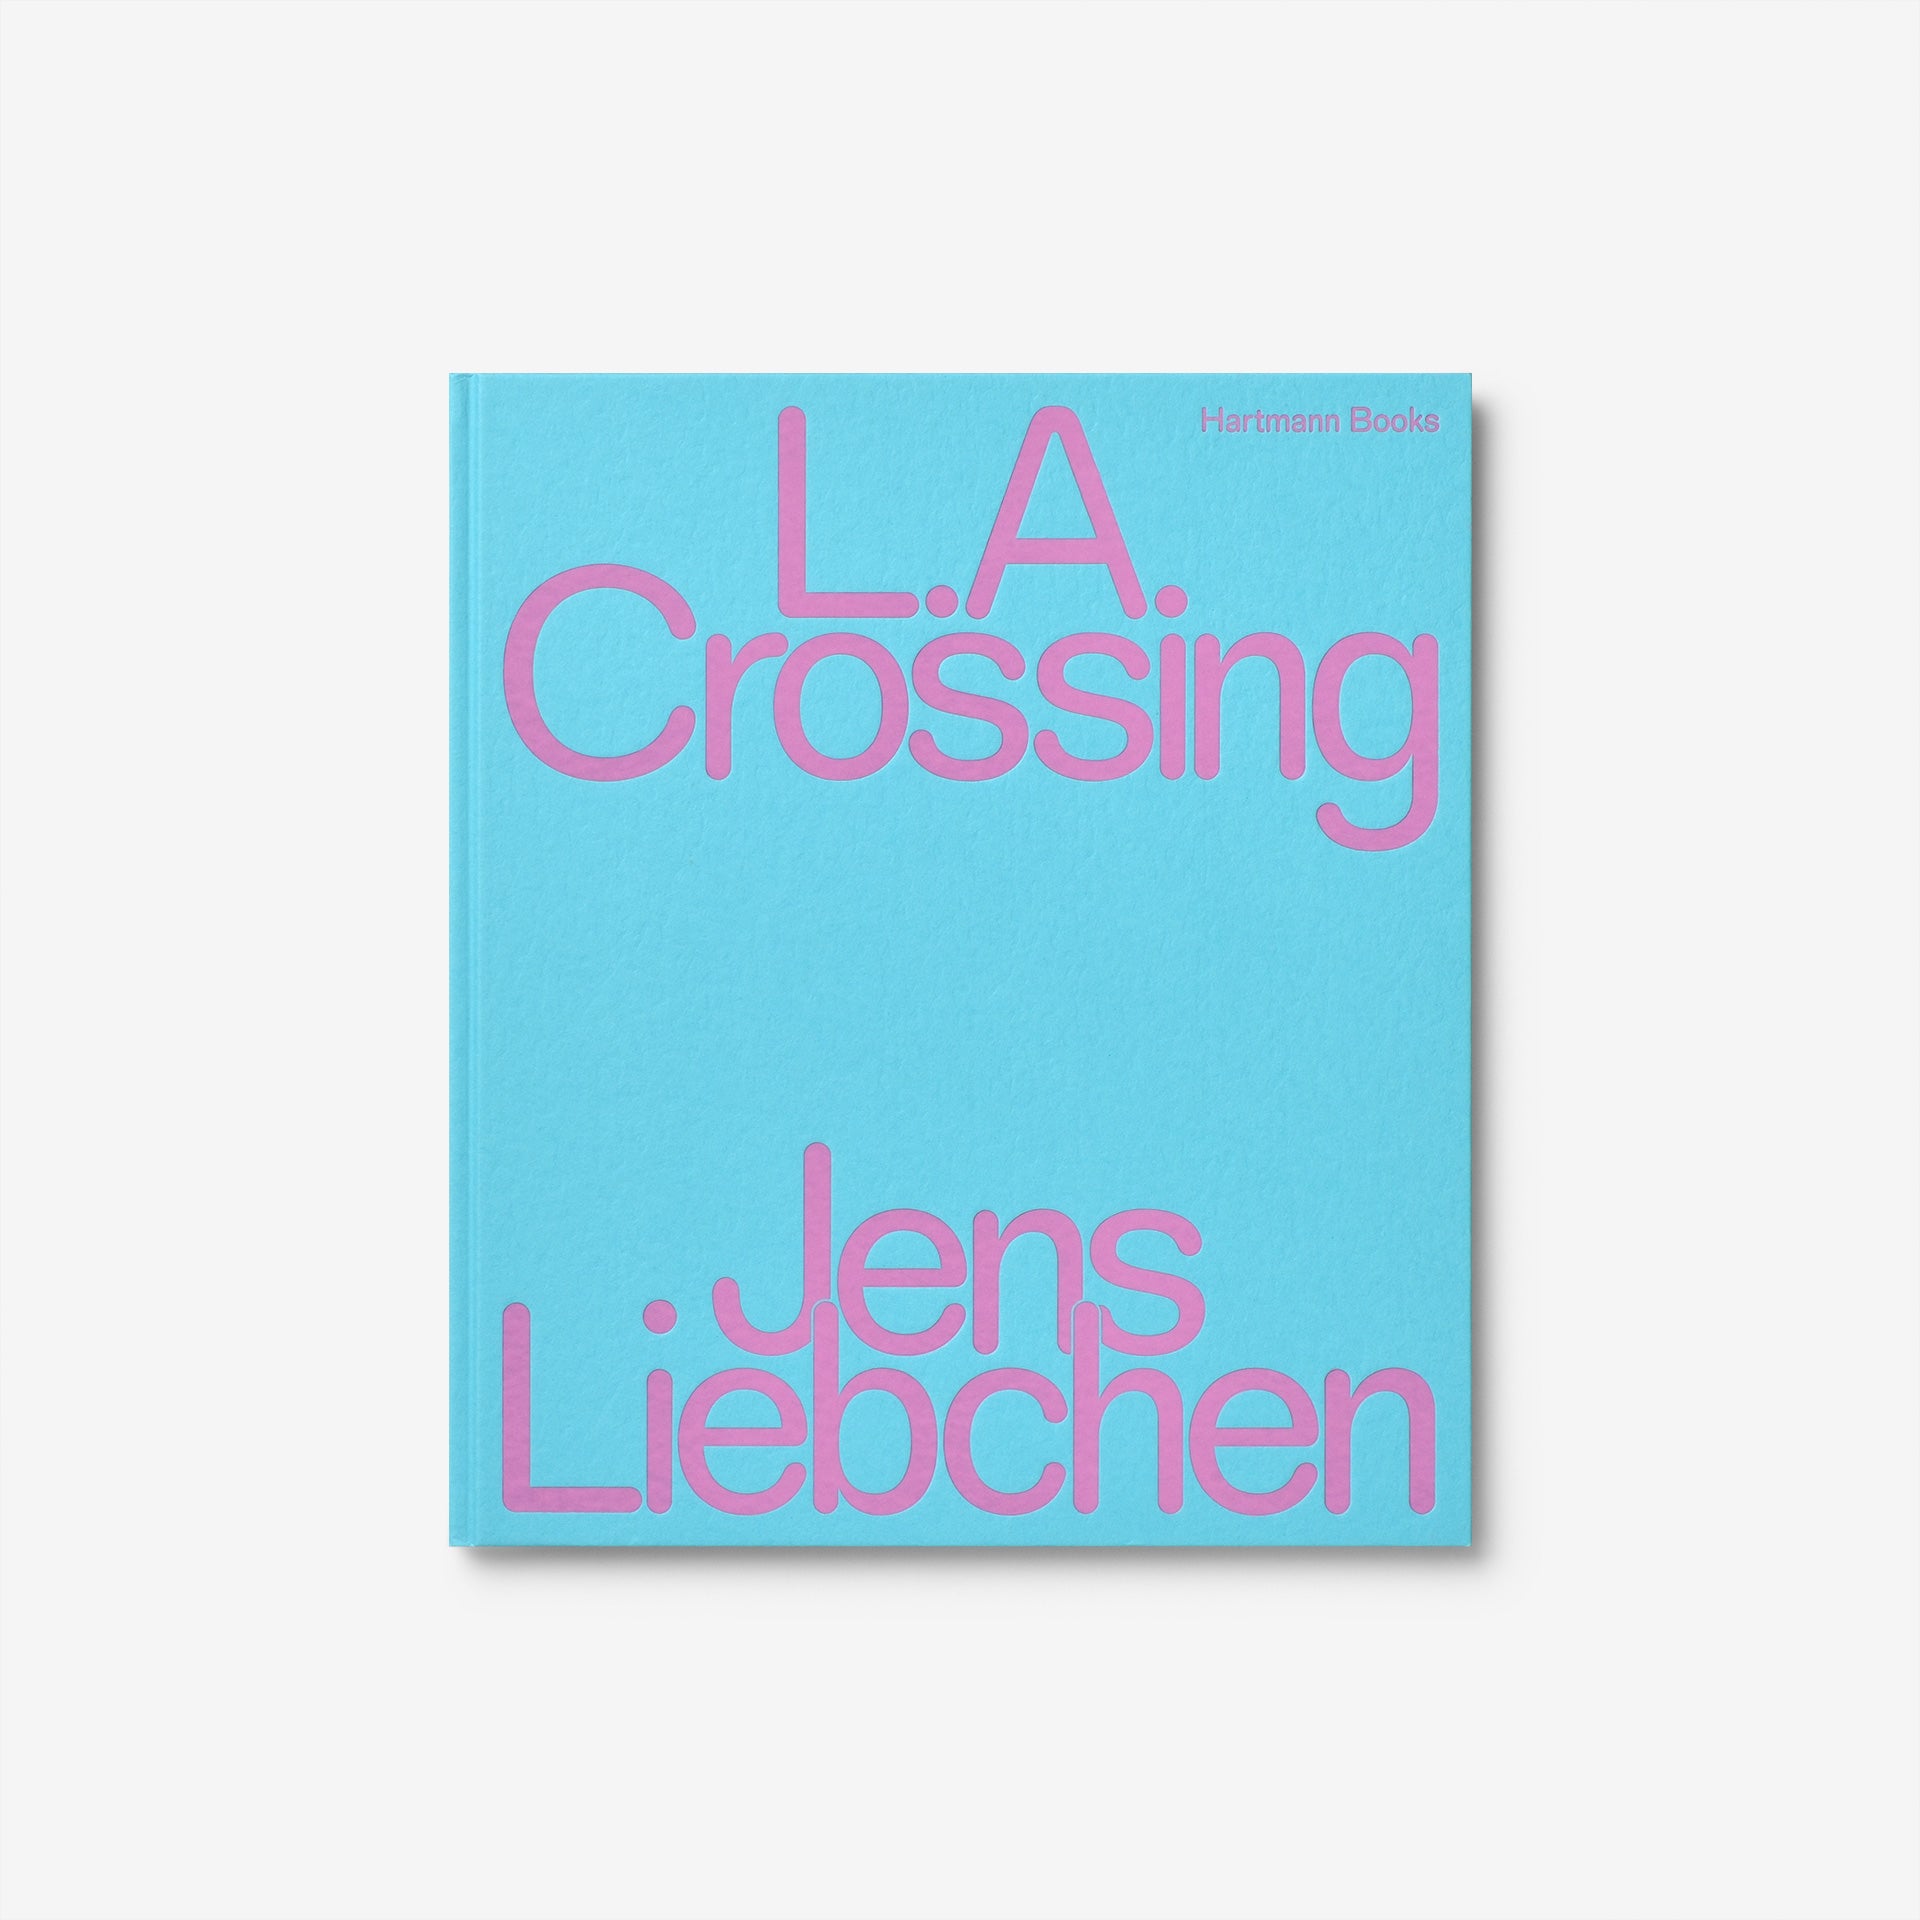 Jens Liebchen: L.A. Crossing